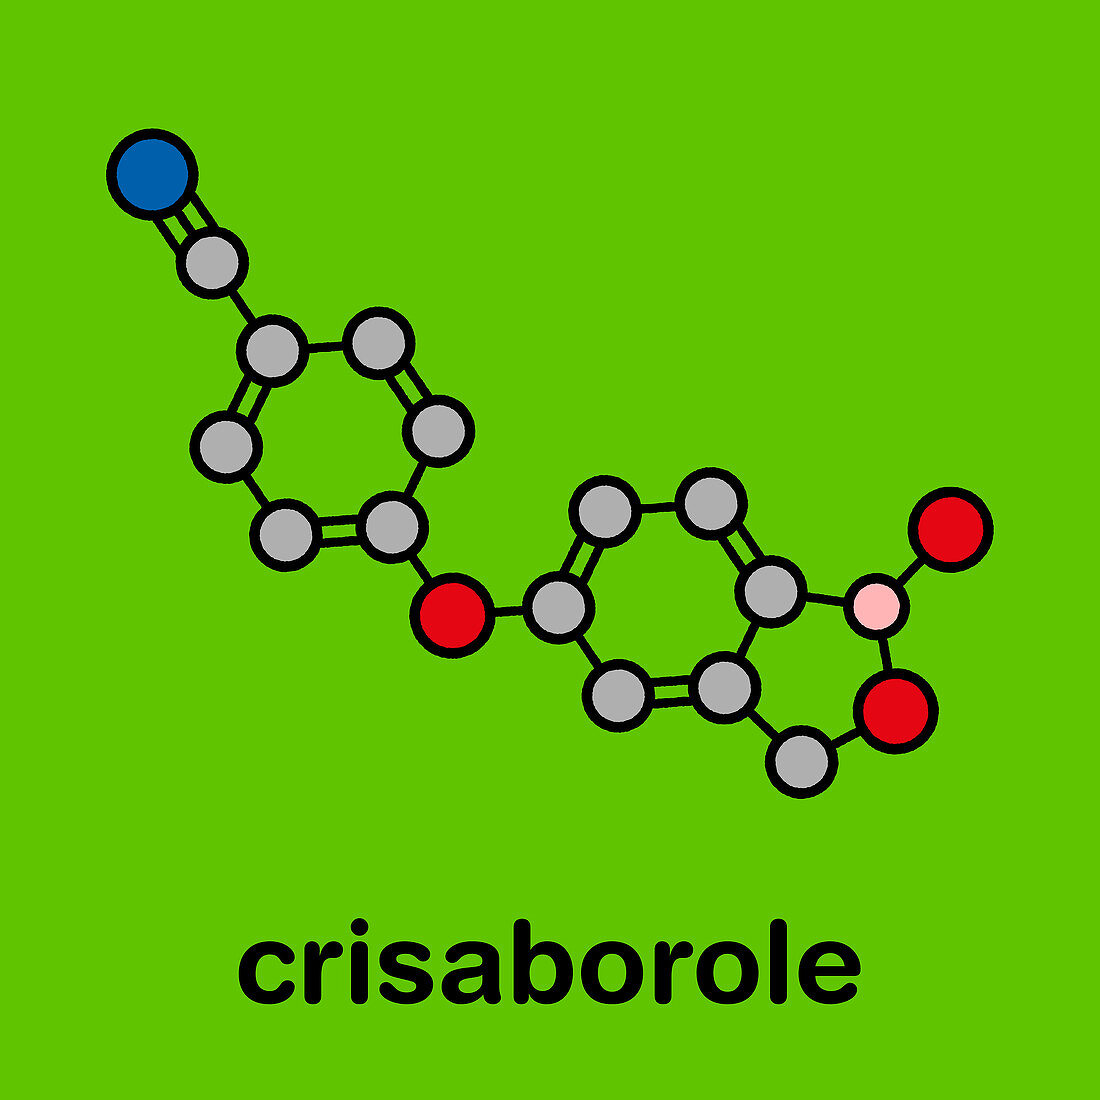 Crisaborole eczema drug molecule, illustration